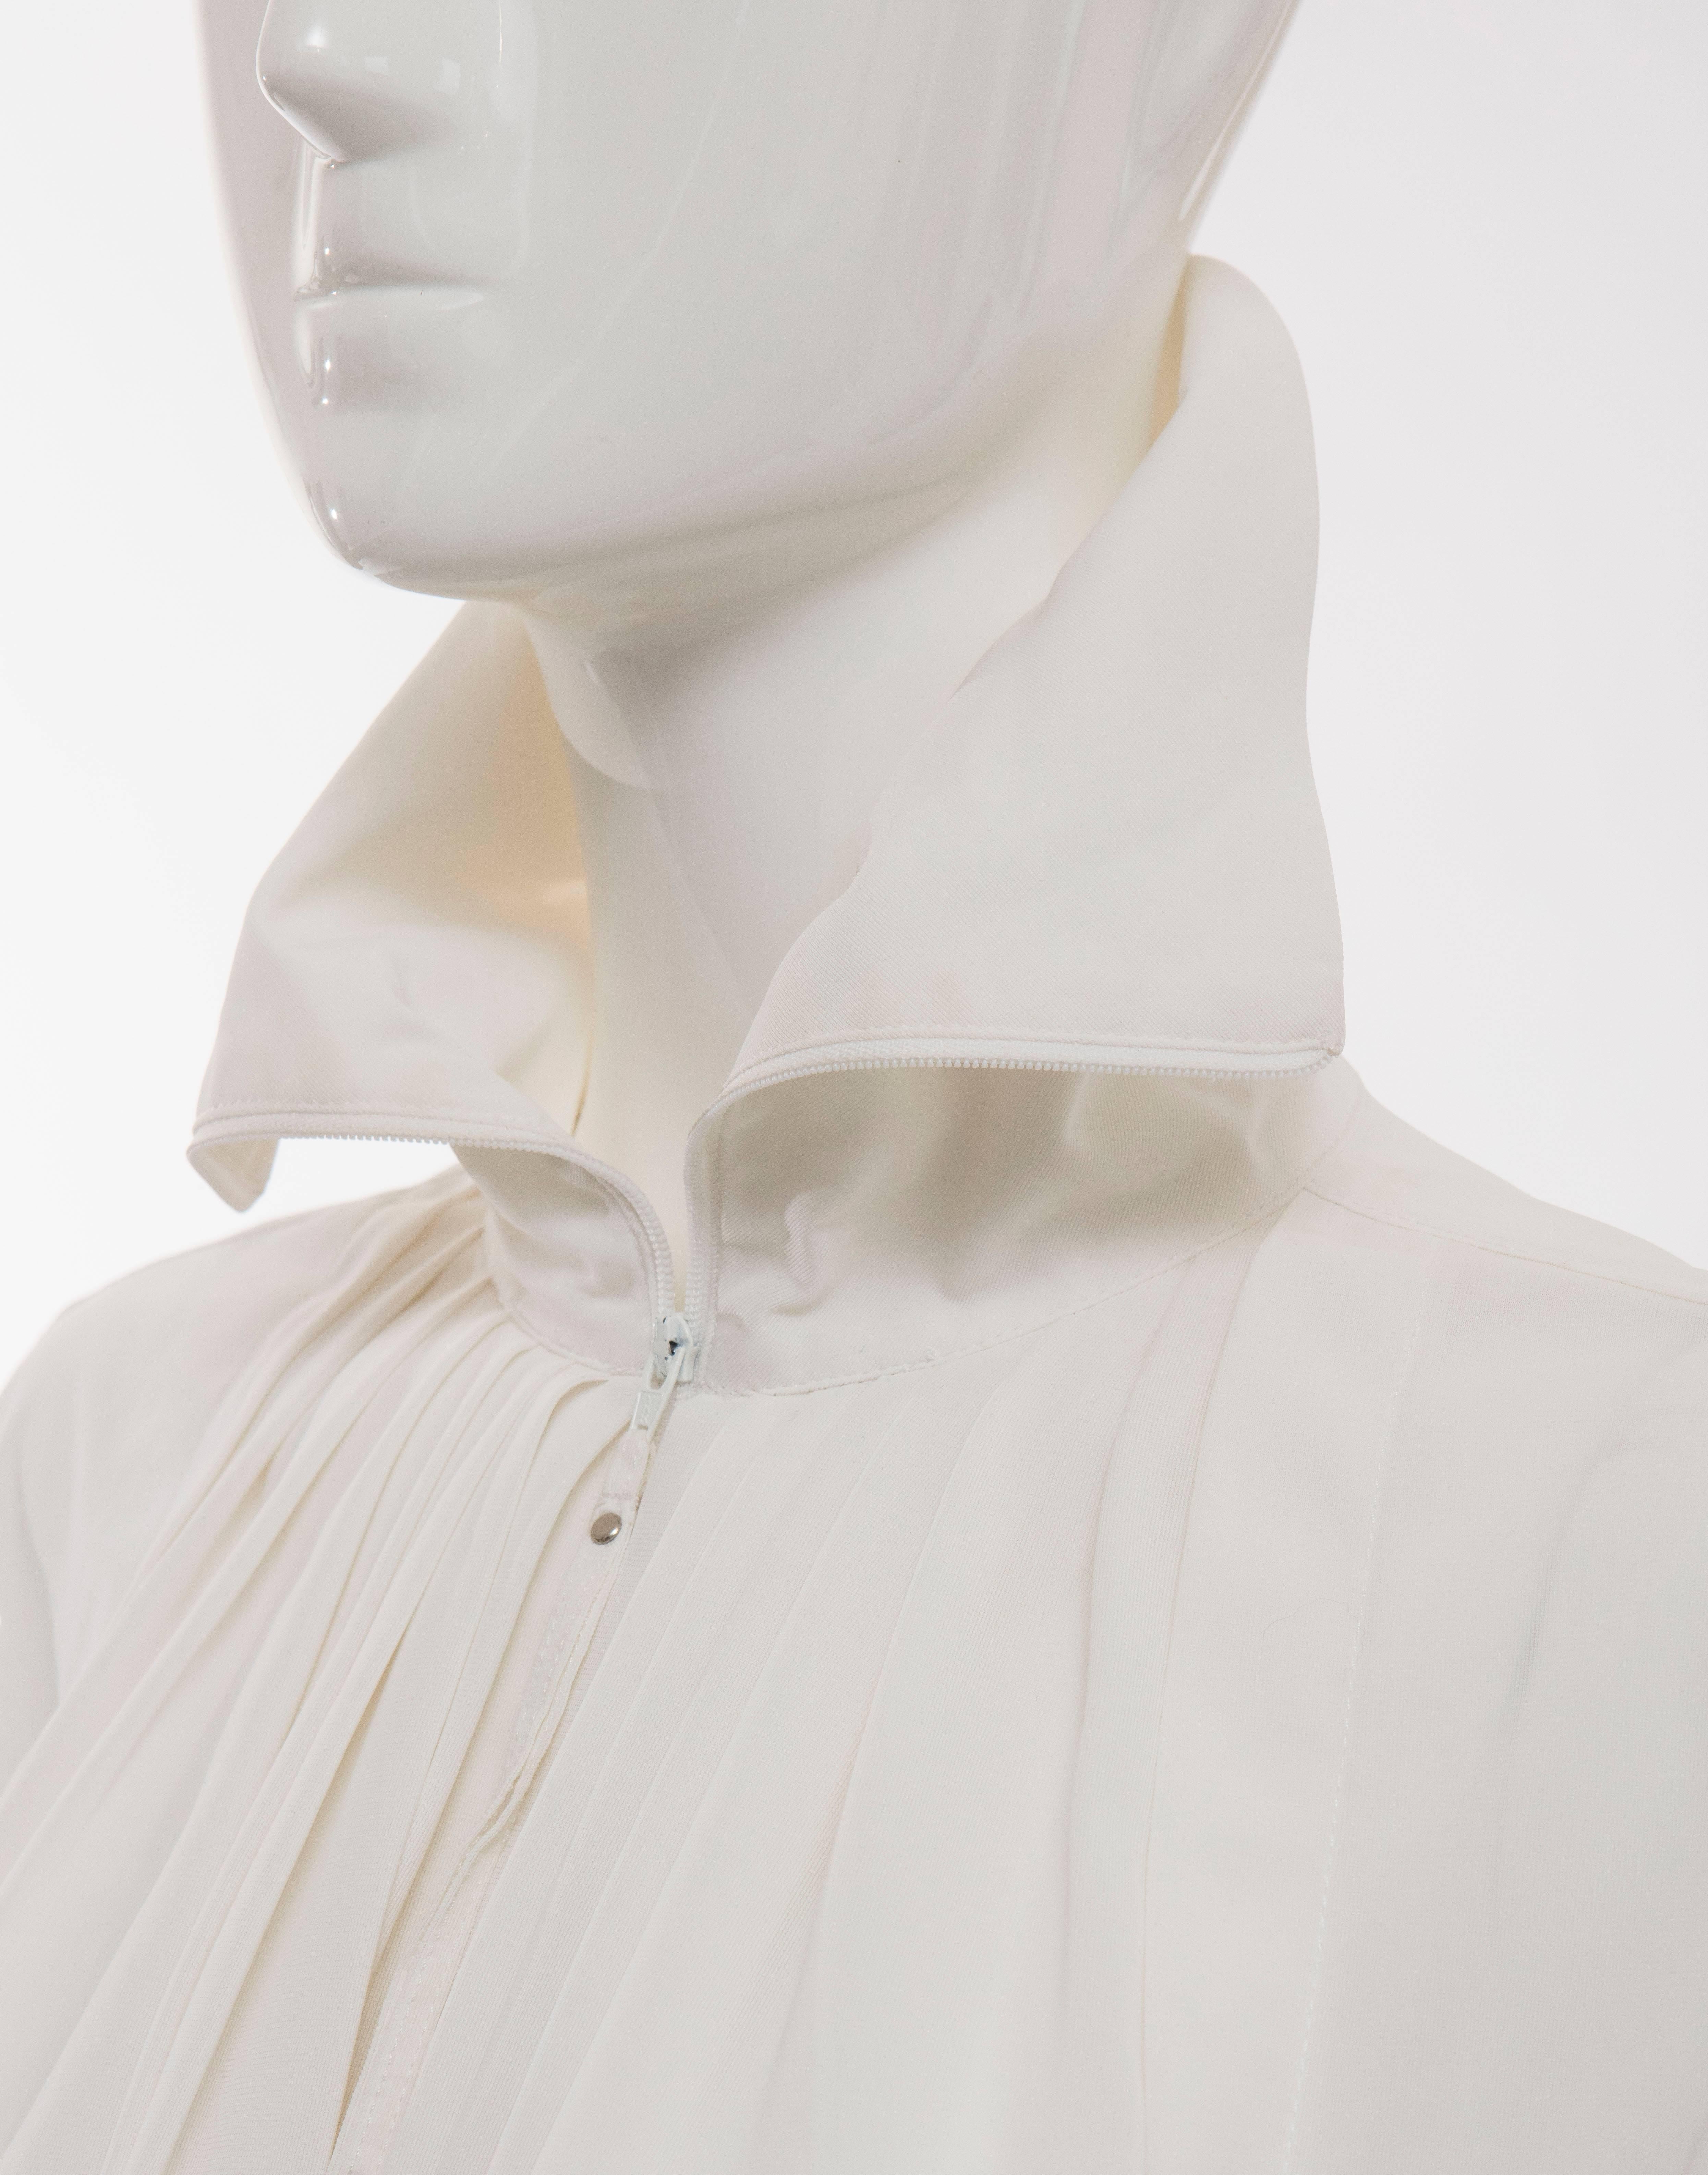 Jean Paul Gaultier White Nylon Zip Front Jacket, Circa 1990s For Sale 4